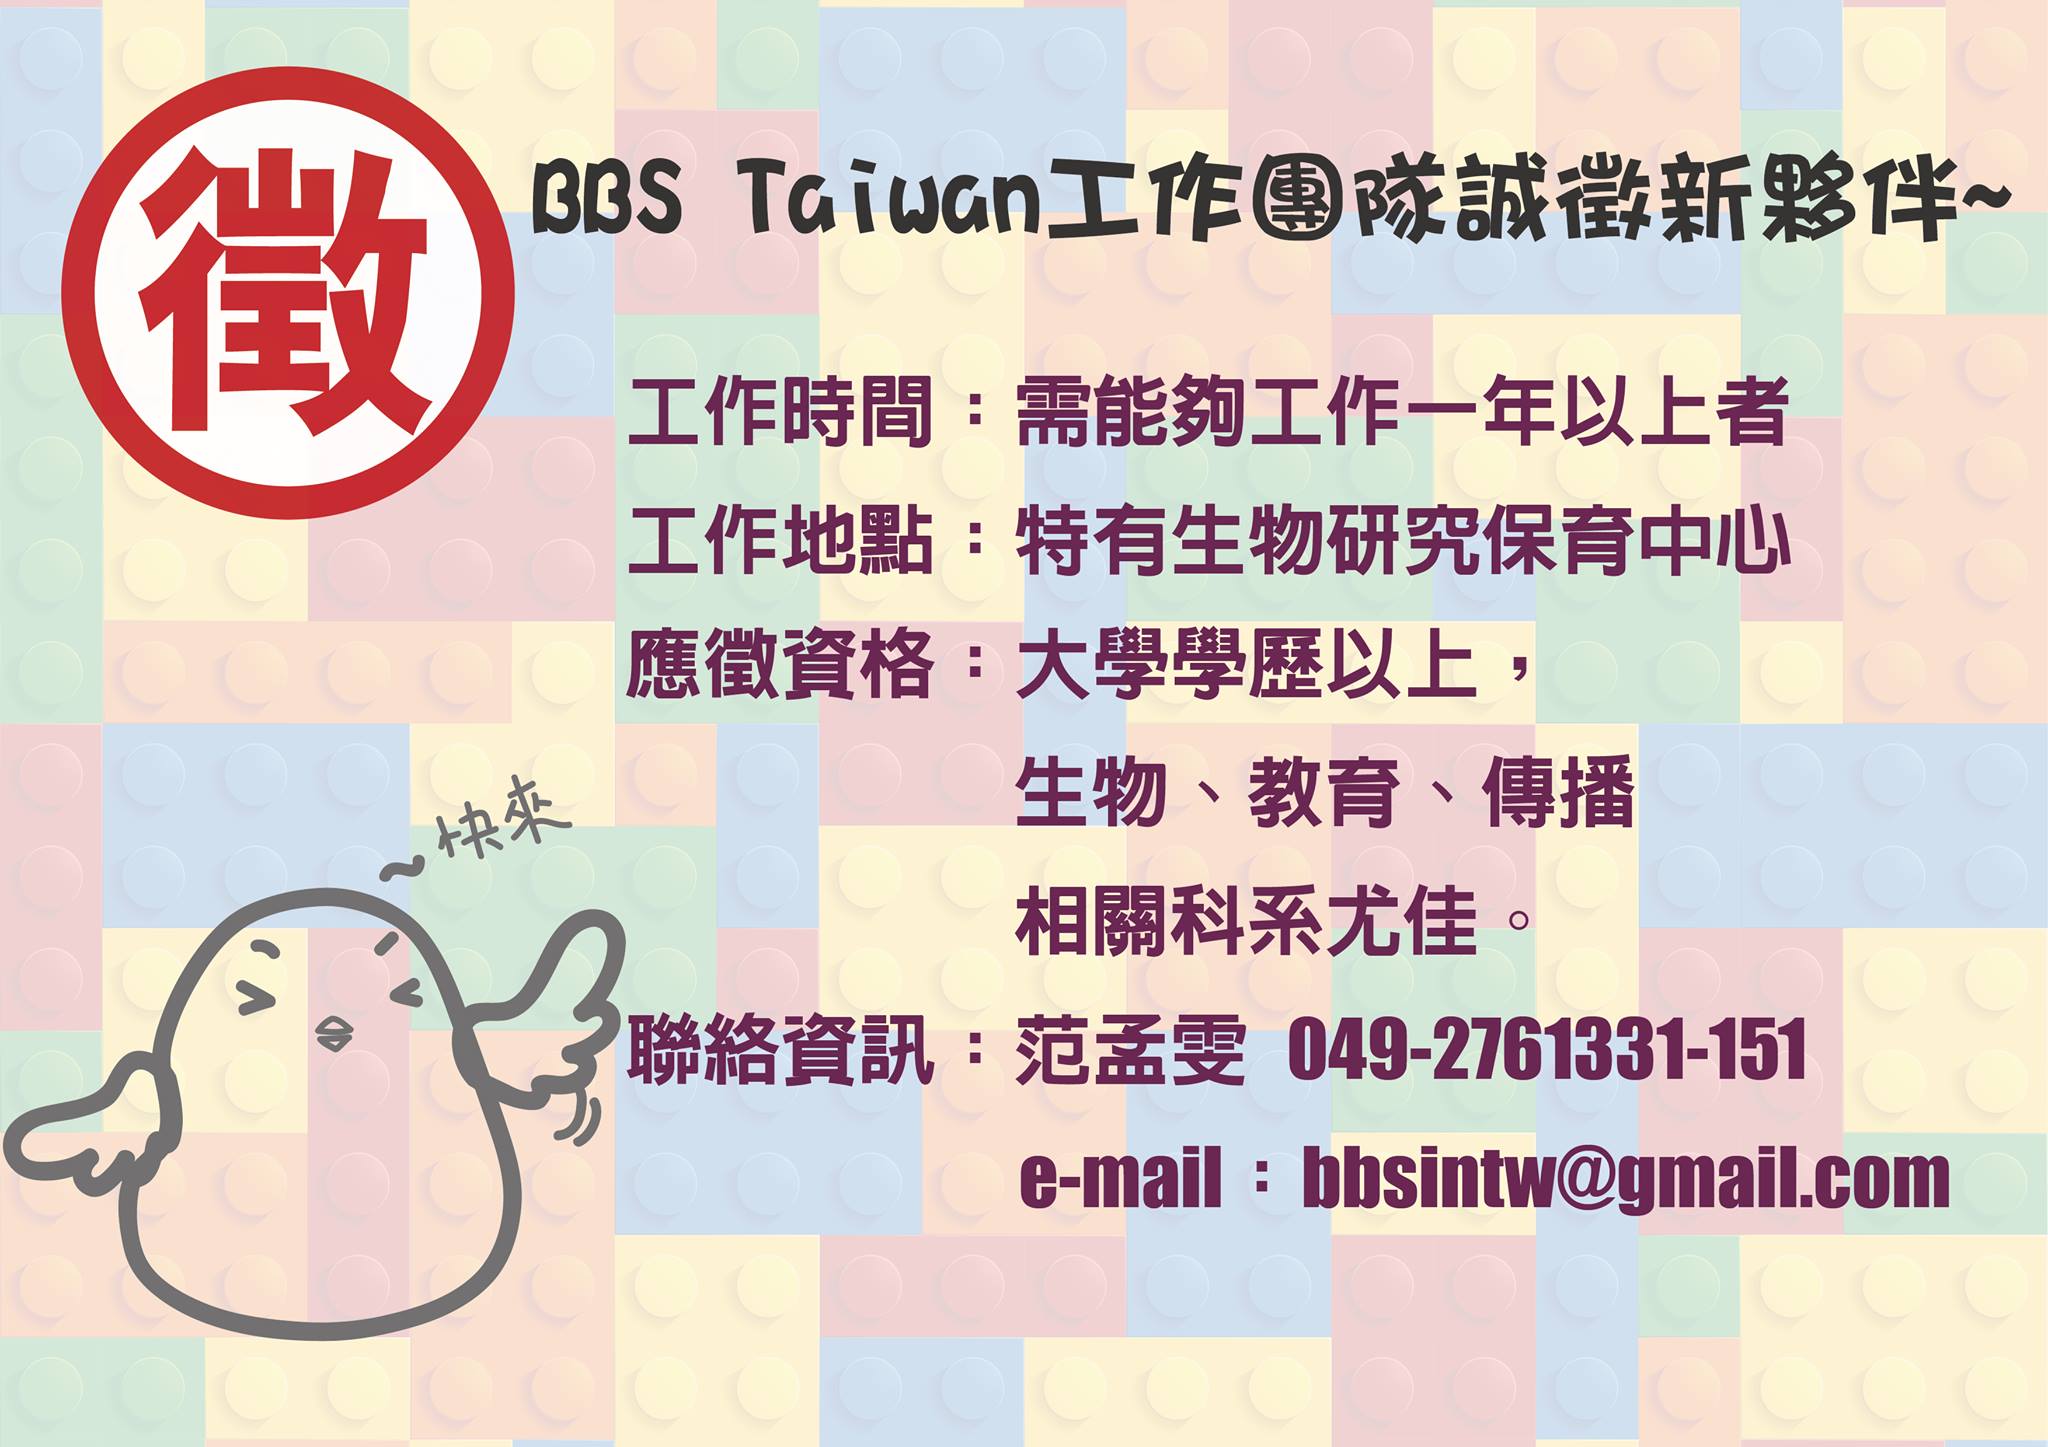 BBS Taiwan徵求工作夥伴-201510.jpg - 日誌用相簿